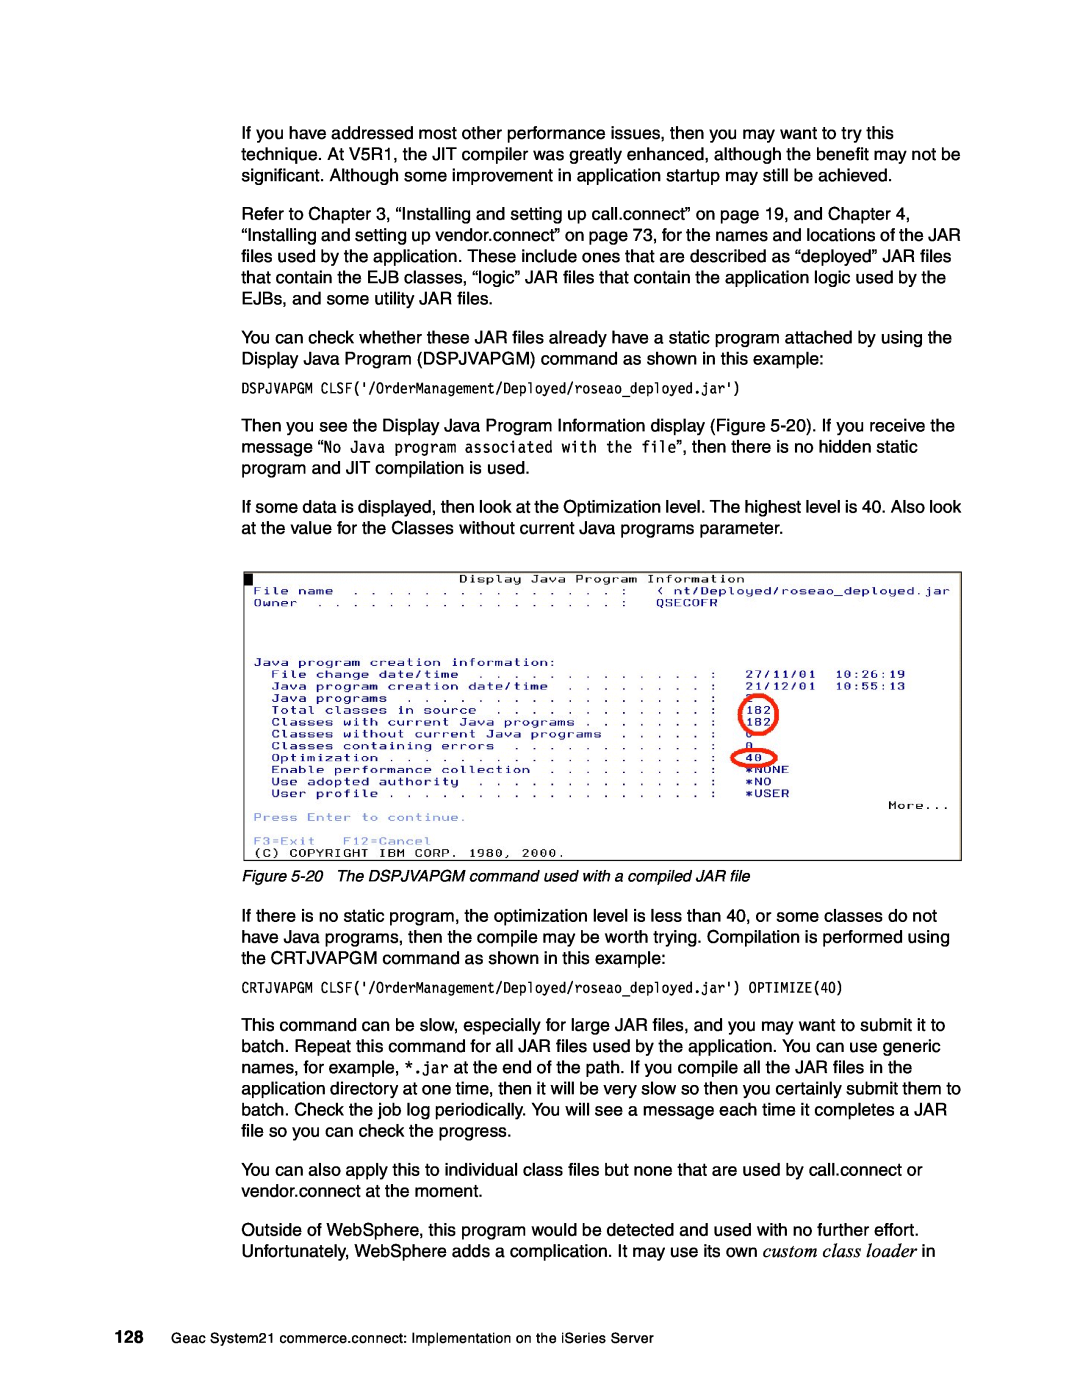 IBM SG24-6526-00 manual DSPJVAPGM CLSF/OrderManagement/Deployed/roseaodeployed.jar 